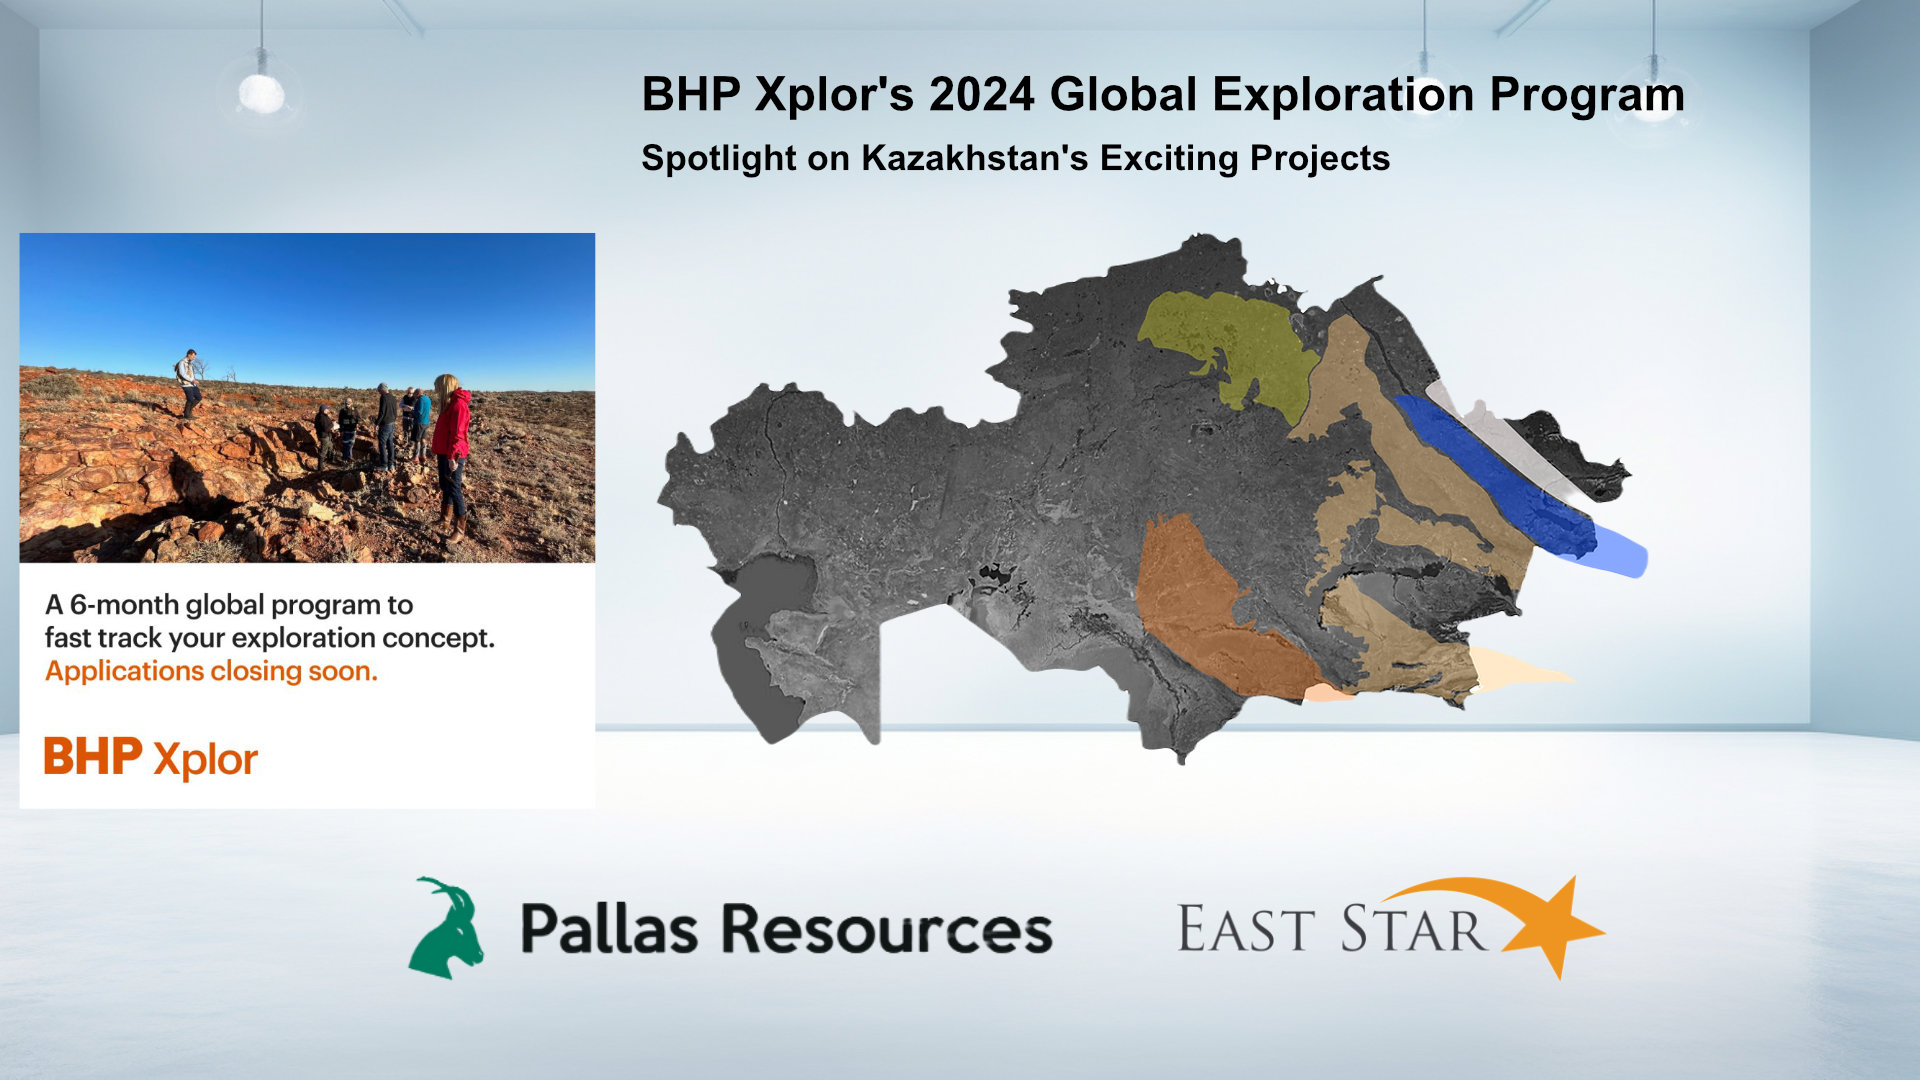 BHP Xplor’s 2024 Global Exploration Program: Spotlight on Kazakhstan’s Exciting Projects